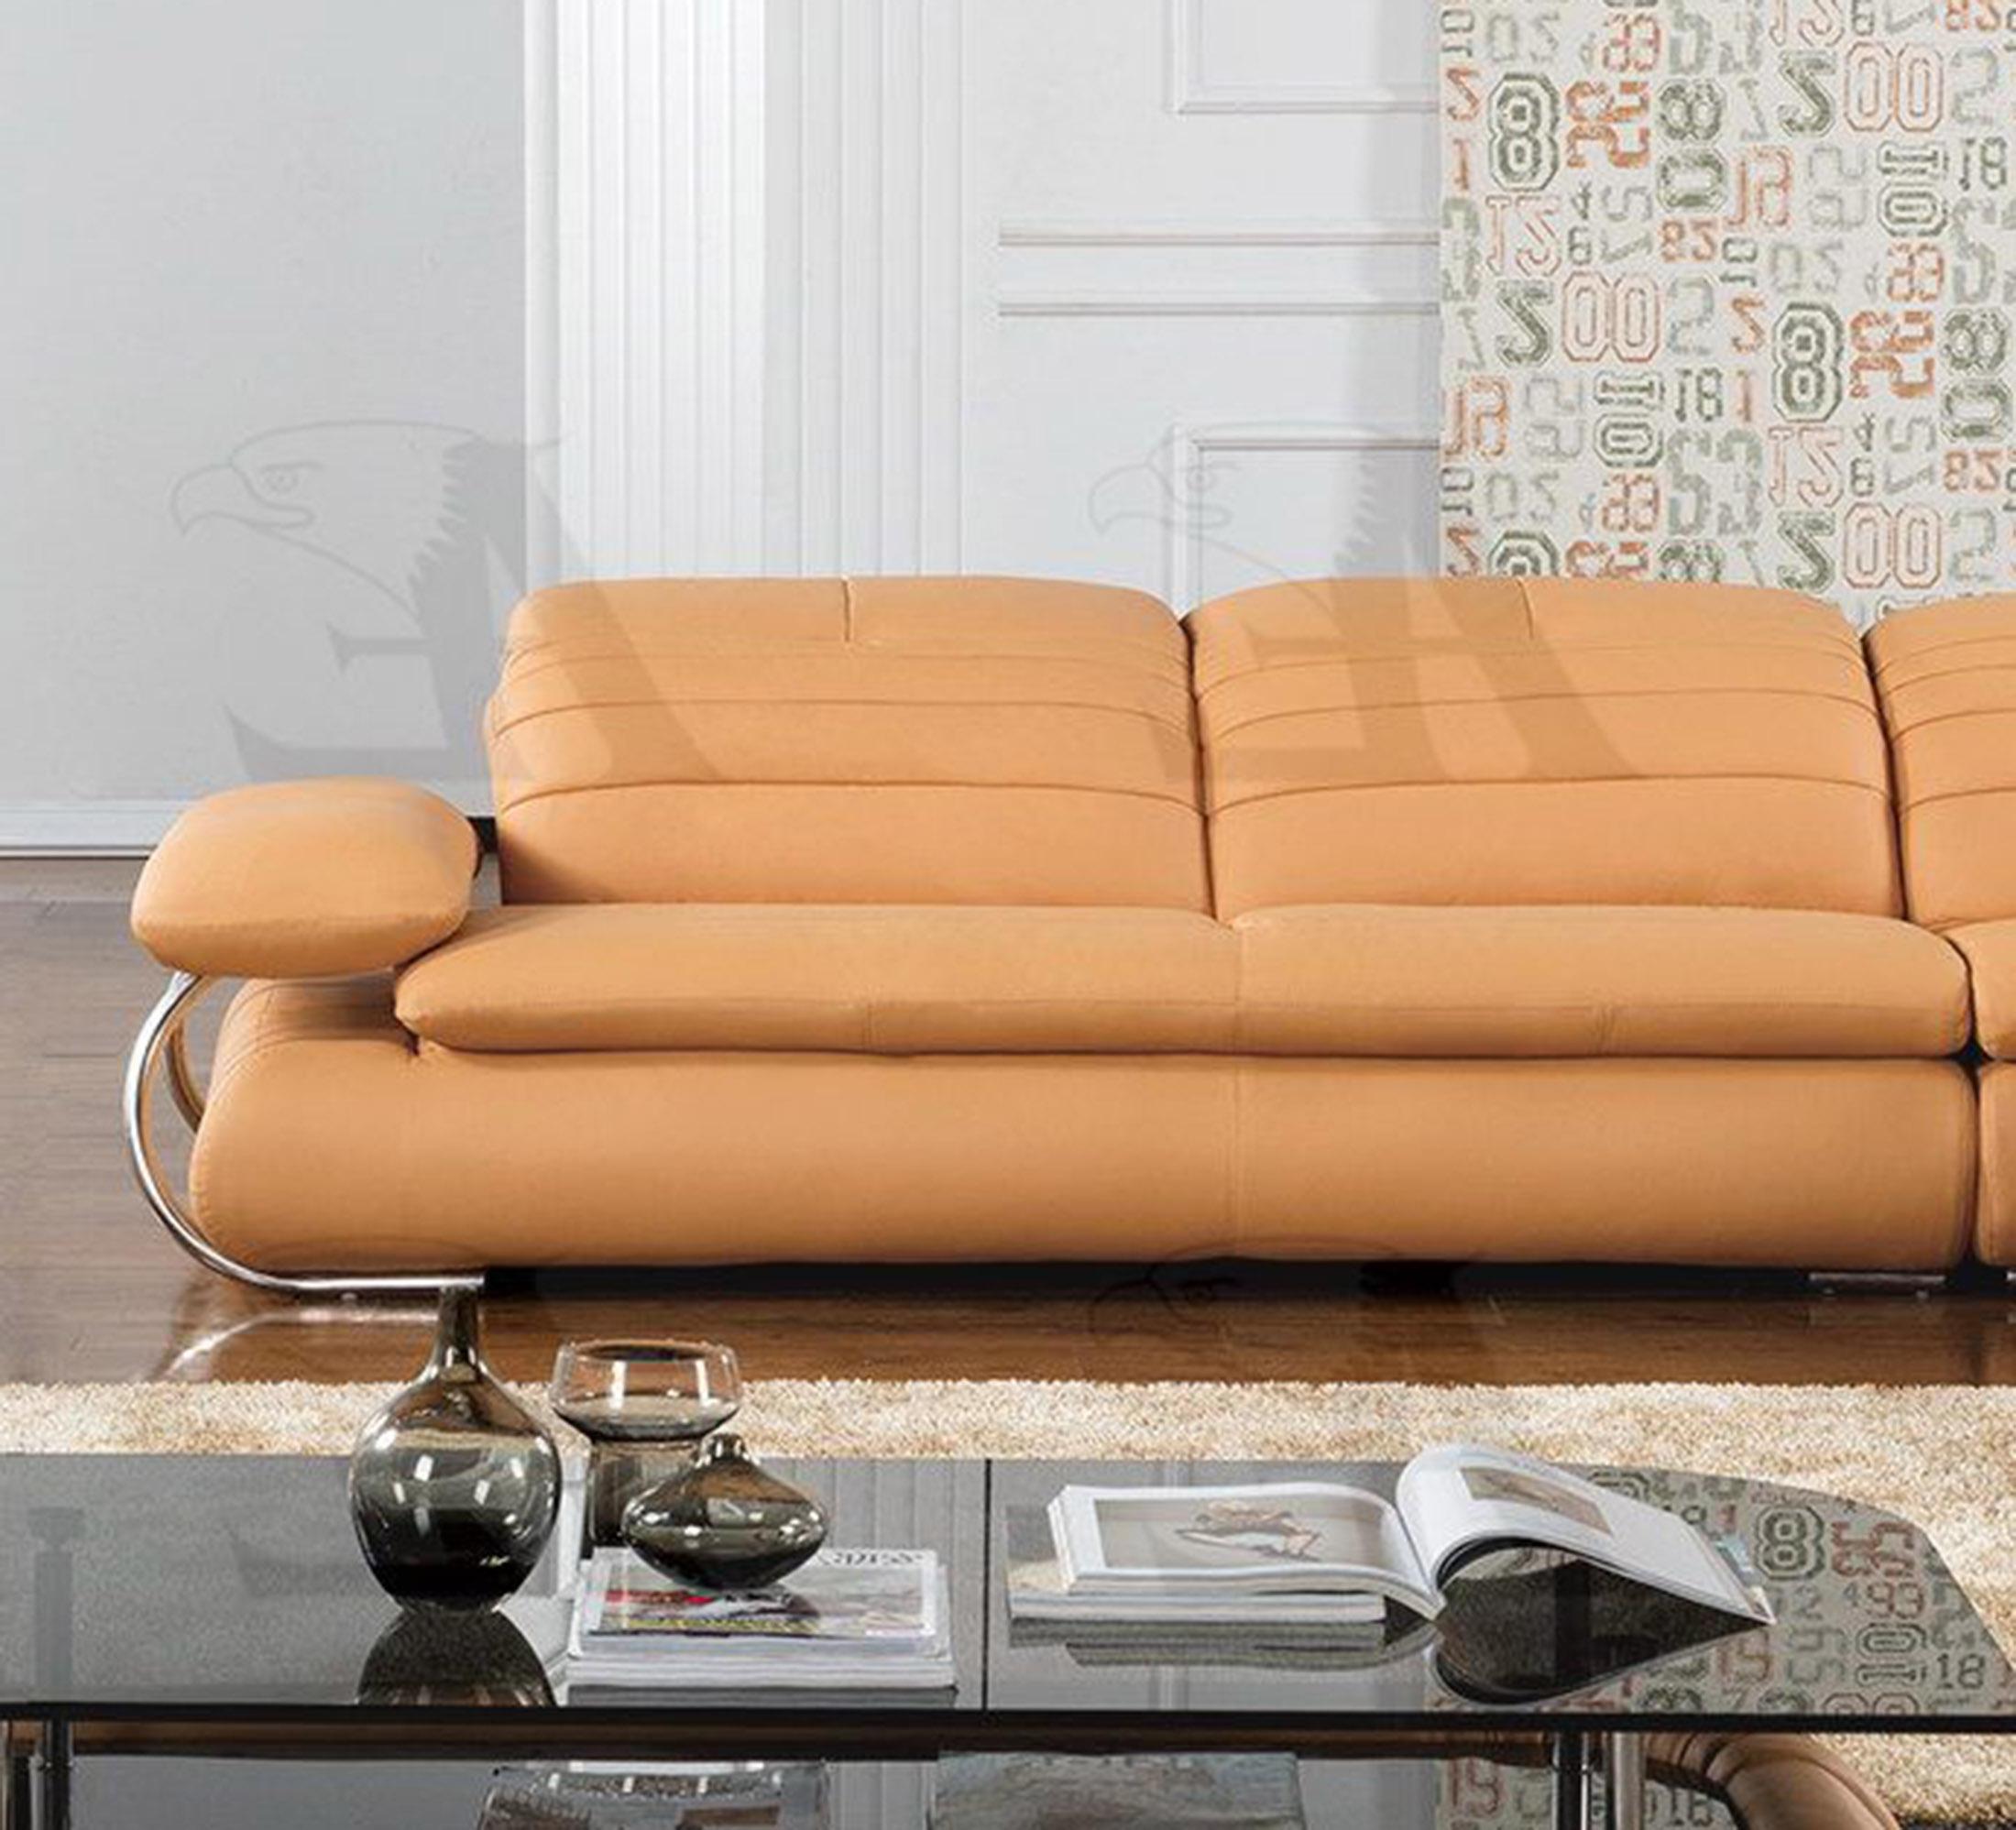 

    
American EagleEK-LB119-YO Sofa RHC Chaise Table 2 Ottomans Set Genuine Leather
